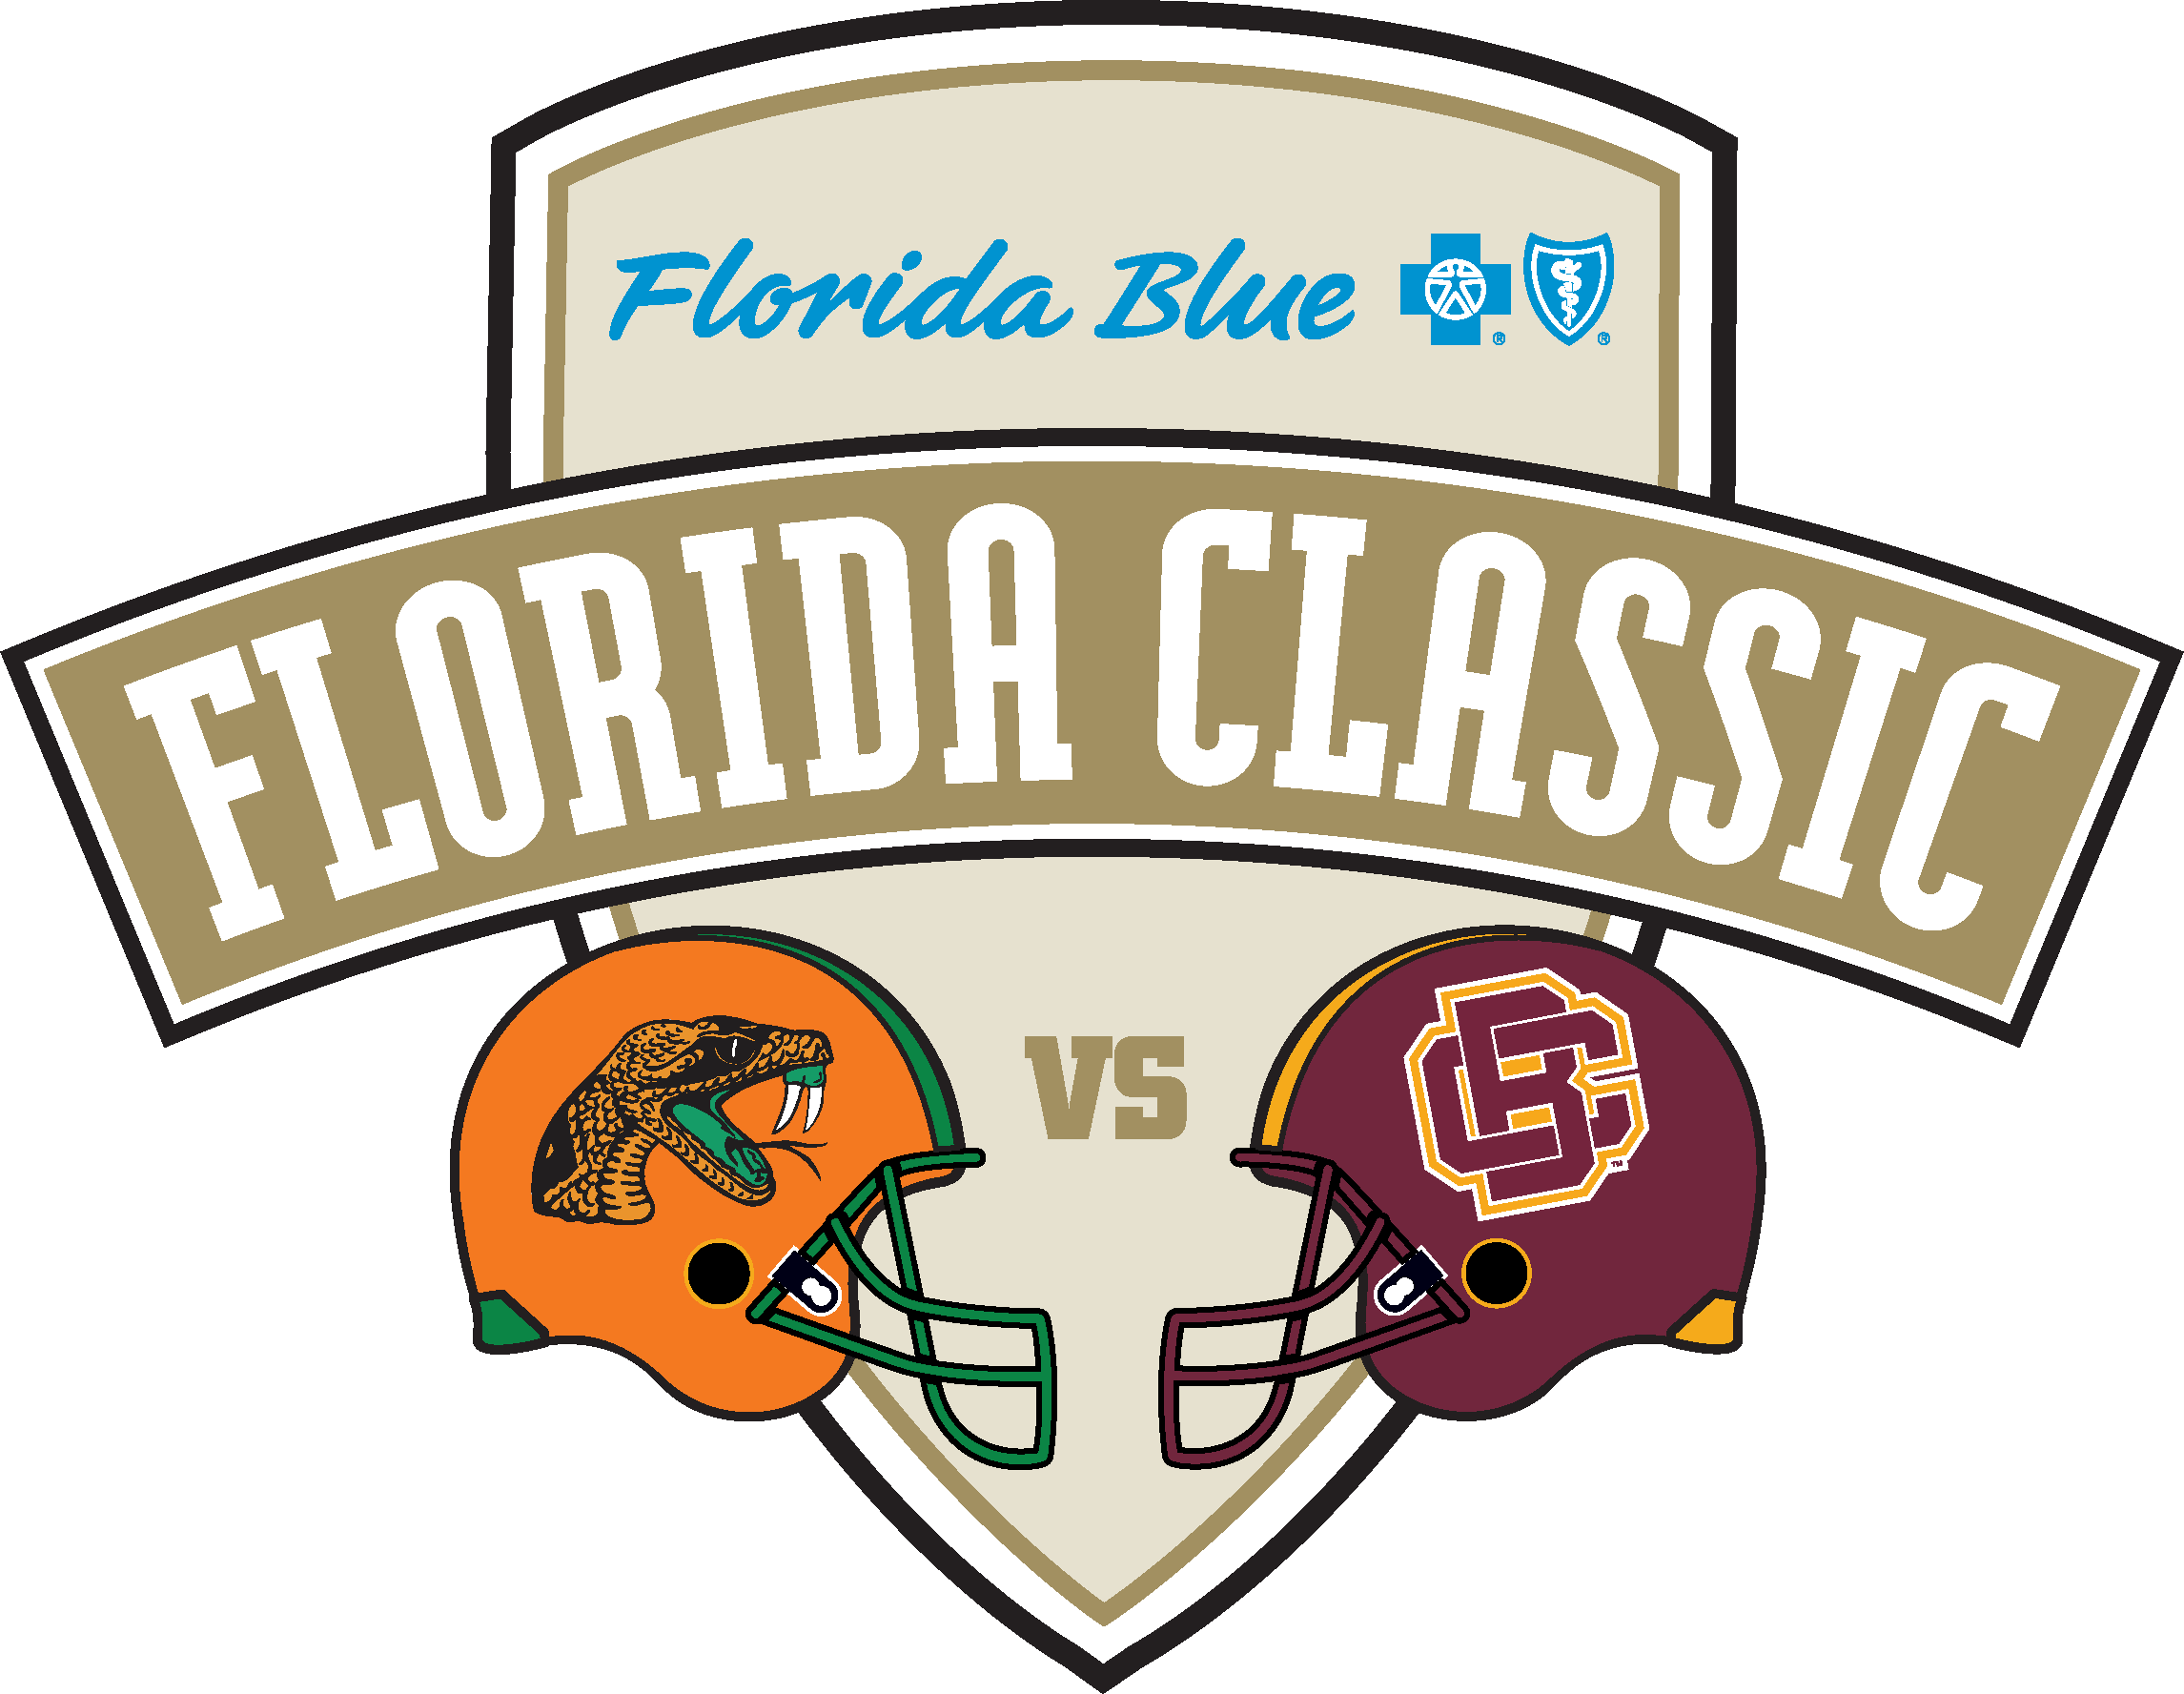 Florida Blue Logo - Florida Blue Florida Classic. FAMU Vs. B CU In Orlando